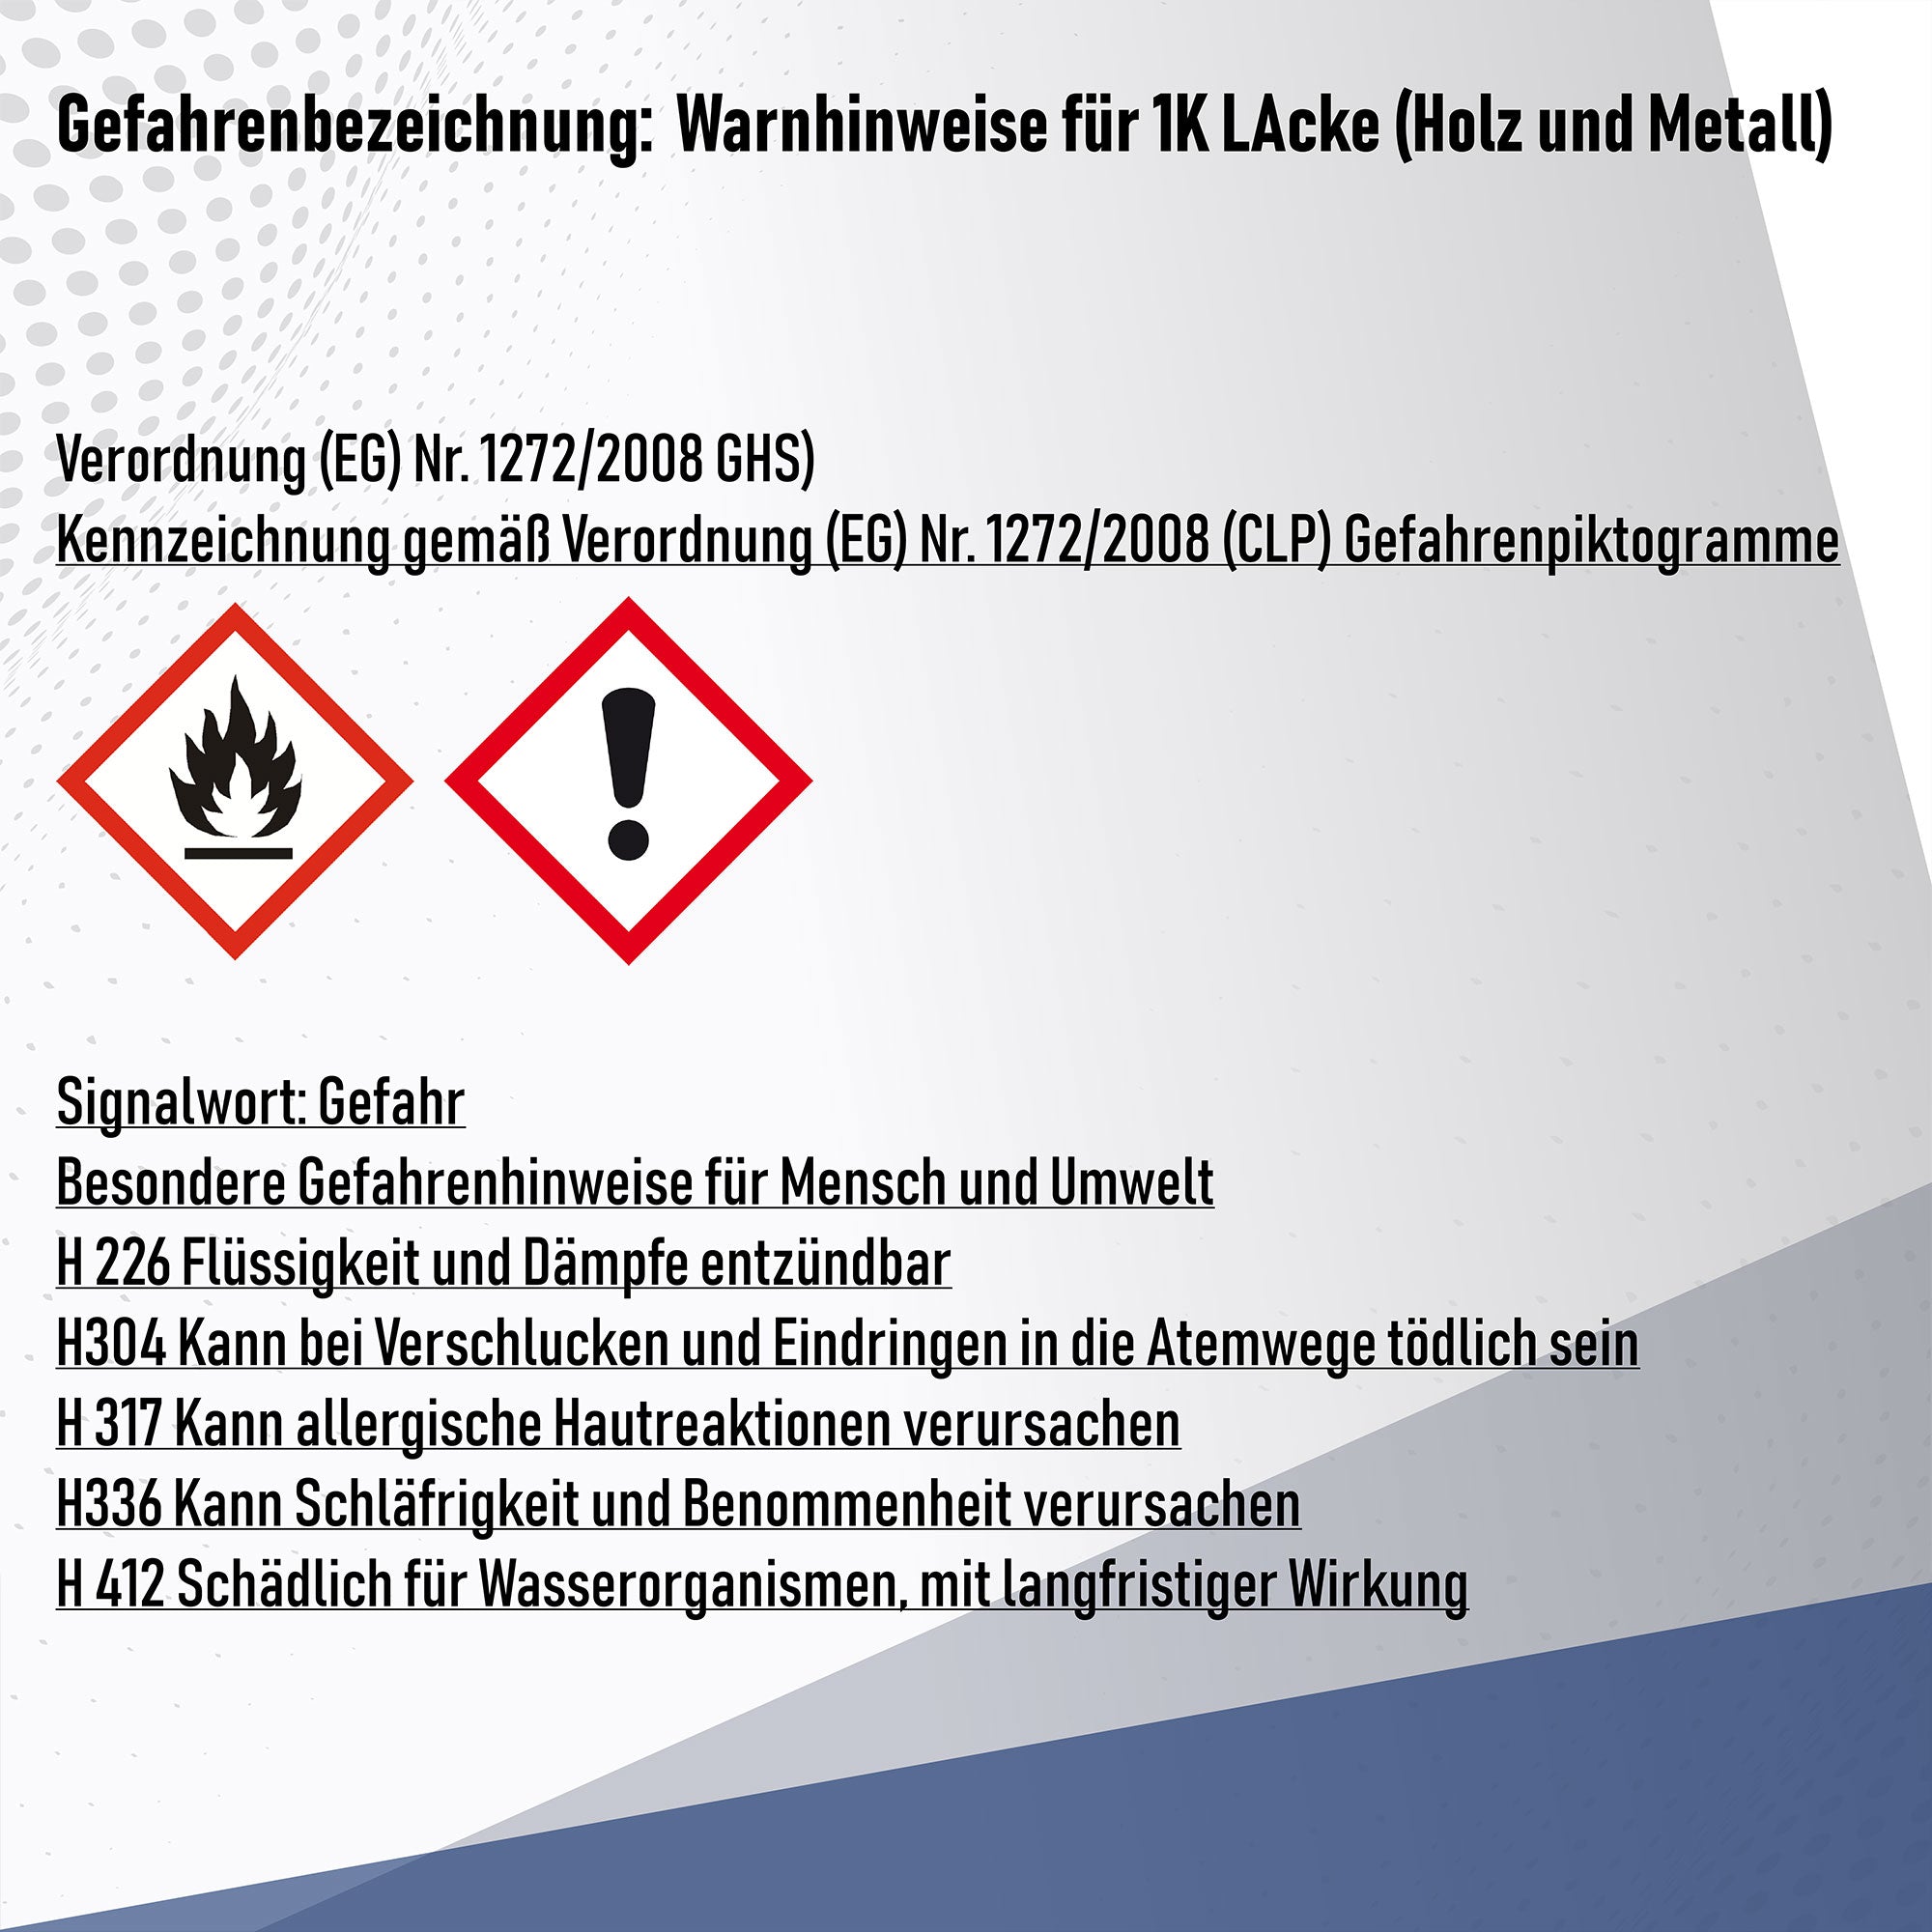 Hamburger Lack-Profi Buntlack in Blaulila RAL 4005 mit Lackierset (X300) & Verdünnung (1 L) - 30% Sparangebot